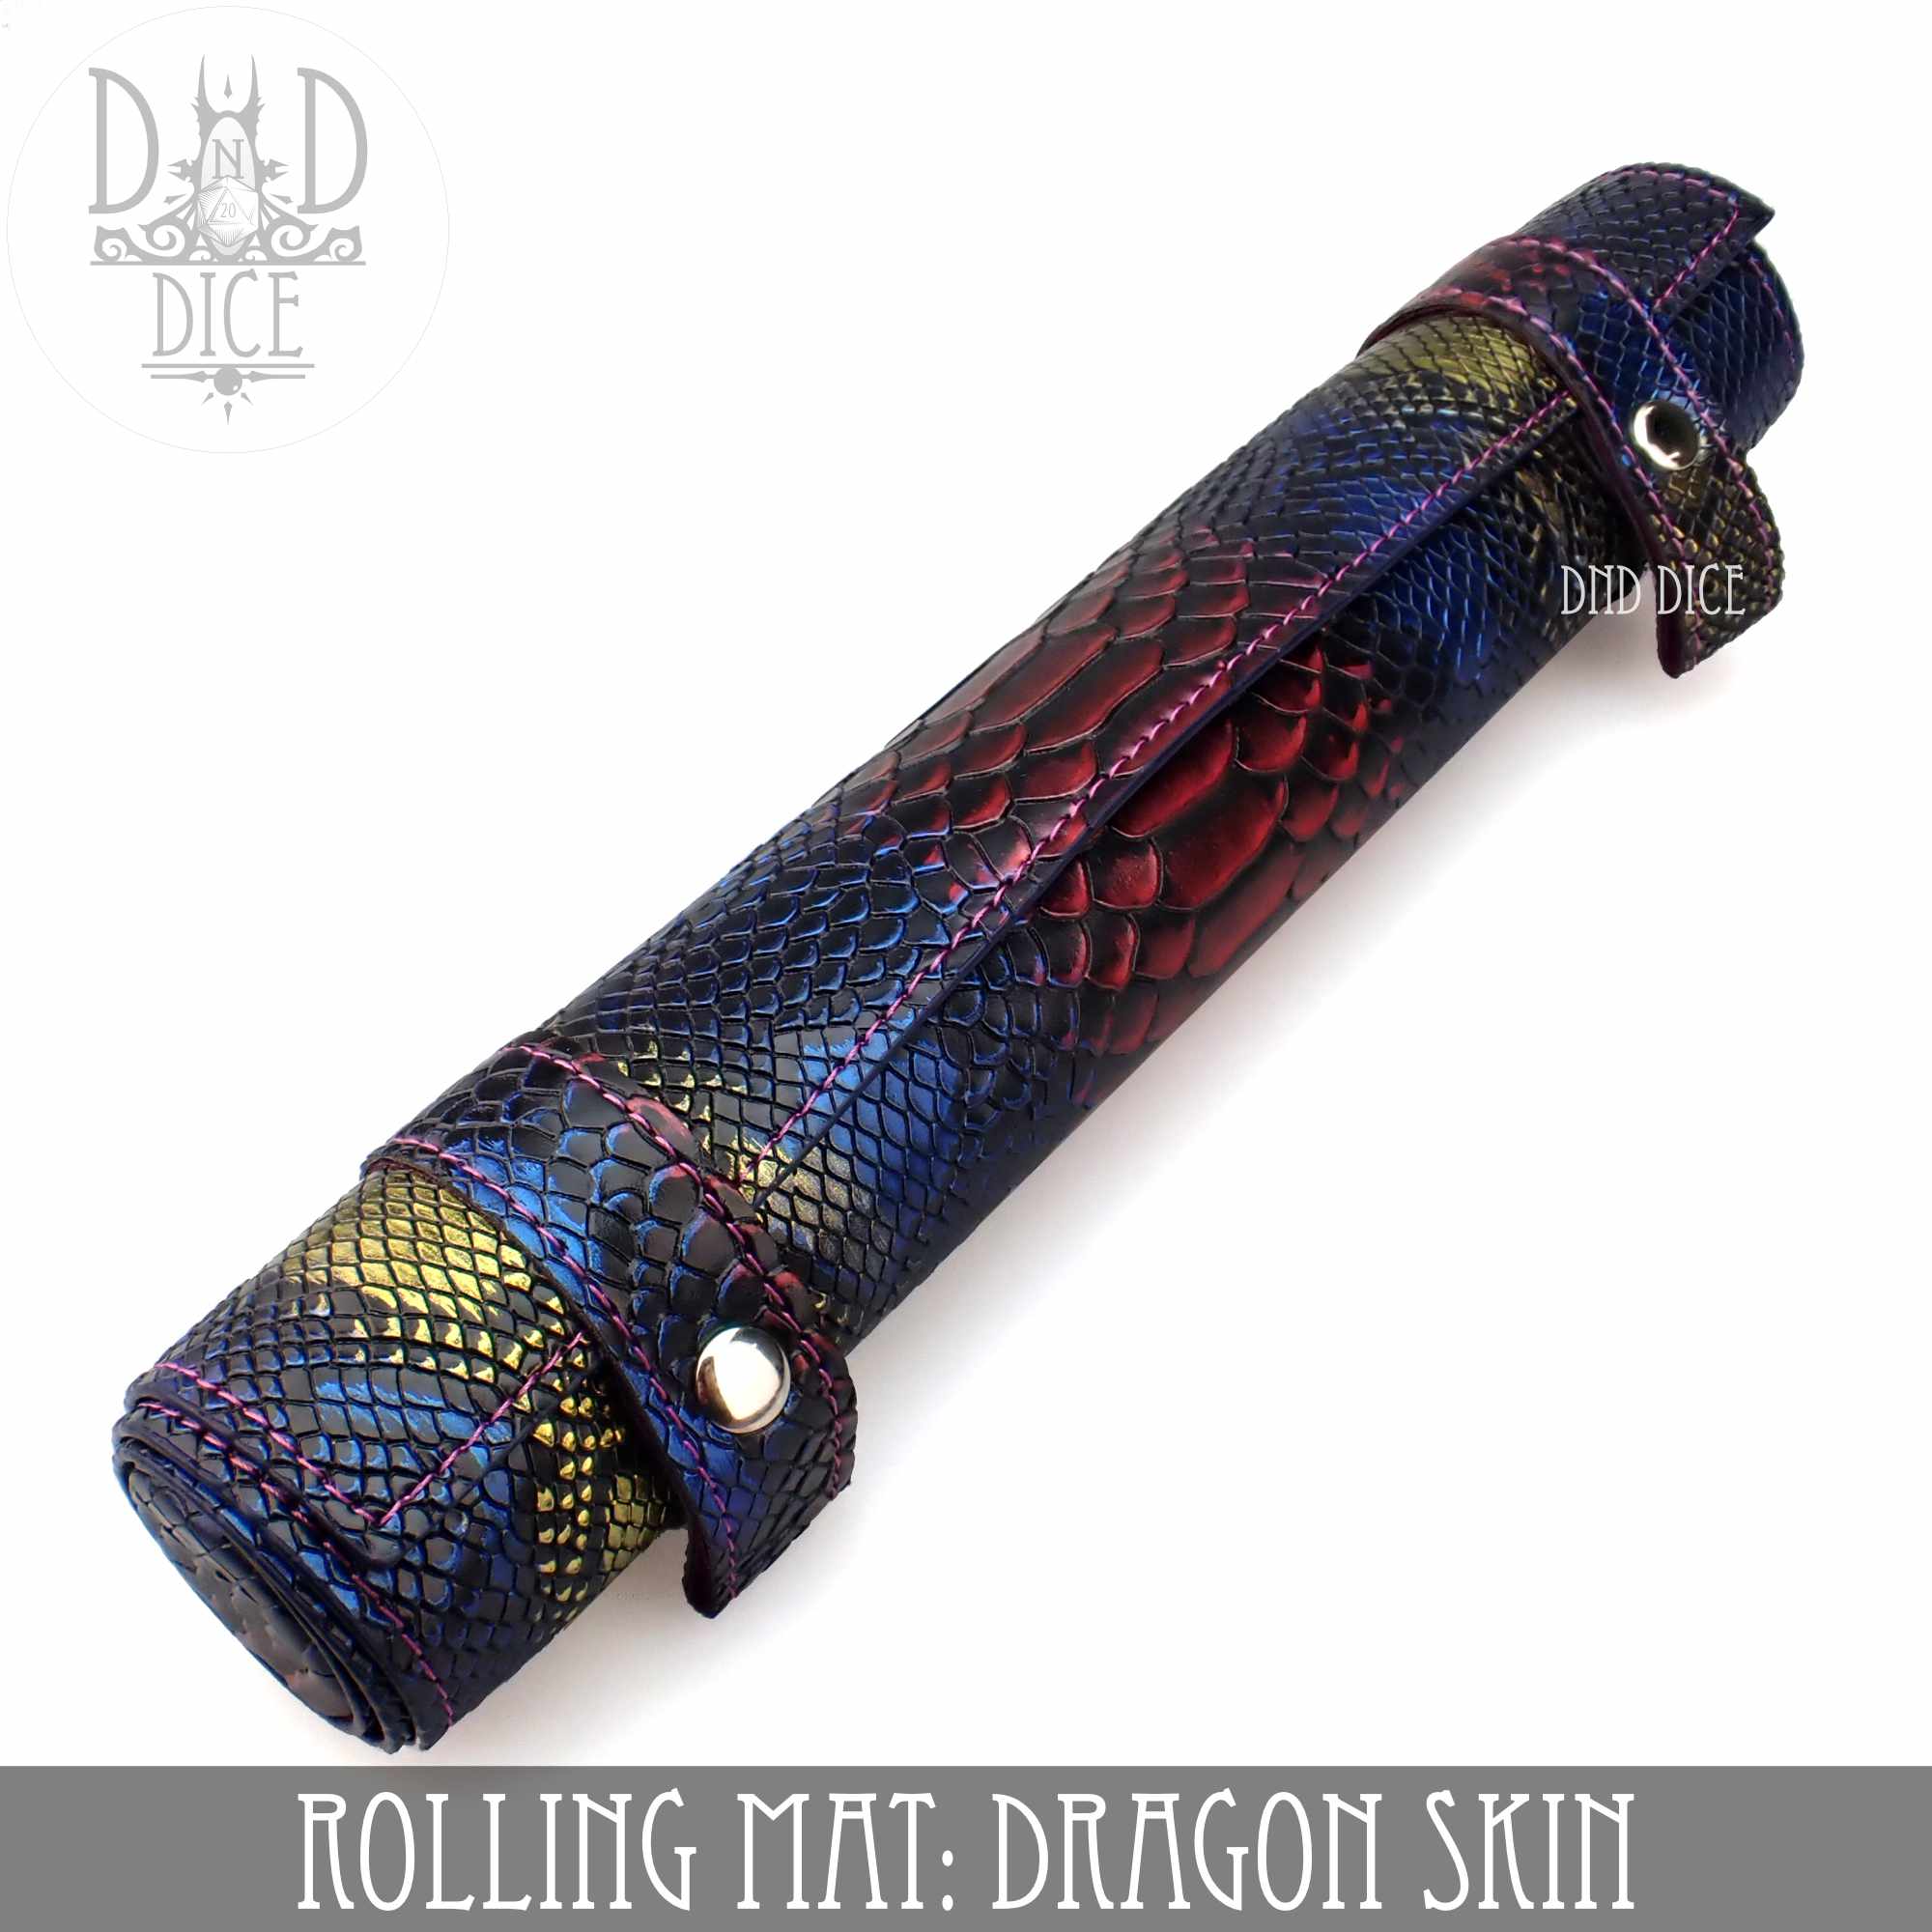 Dice Rolling Mat (6 Colors)